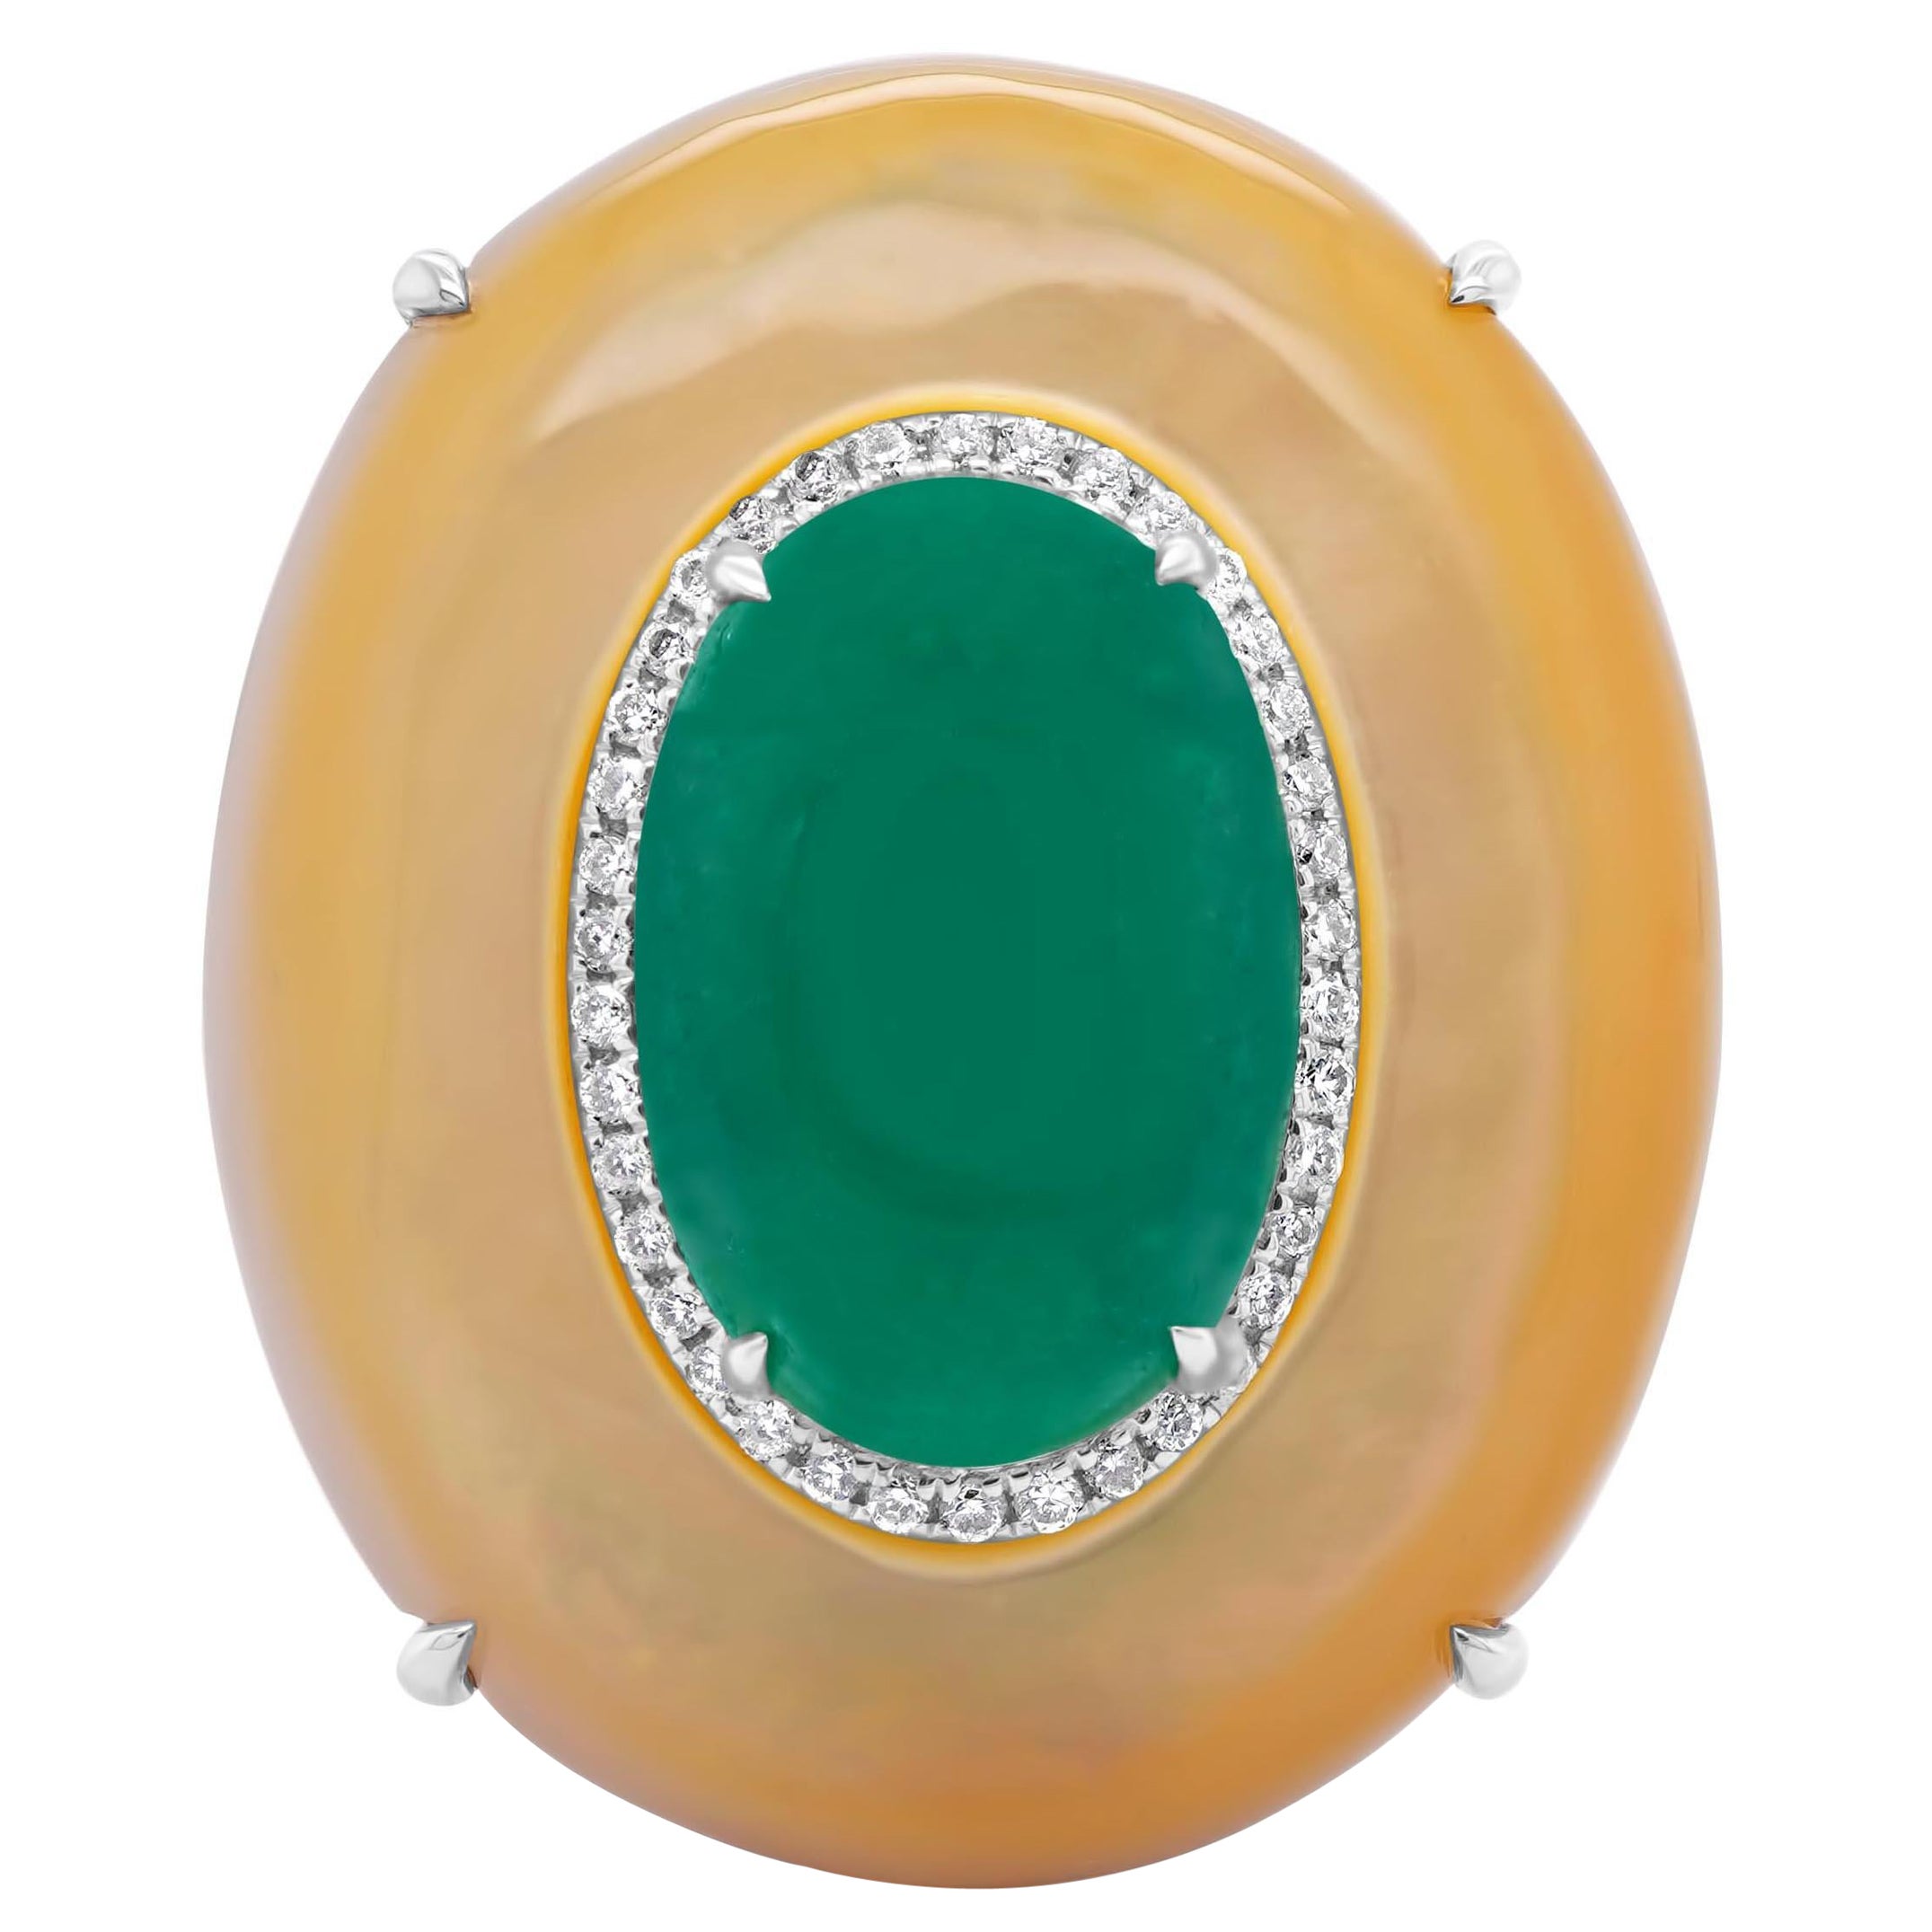 2.67 Carat Intense Green Emerald Encrusted Yellow Shell 18K White Gold Ring